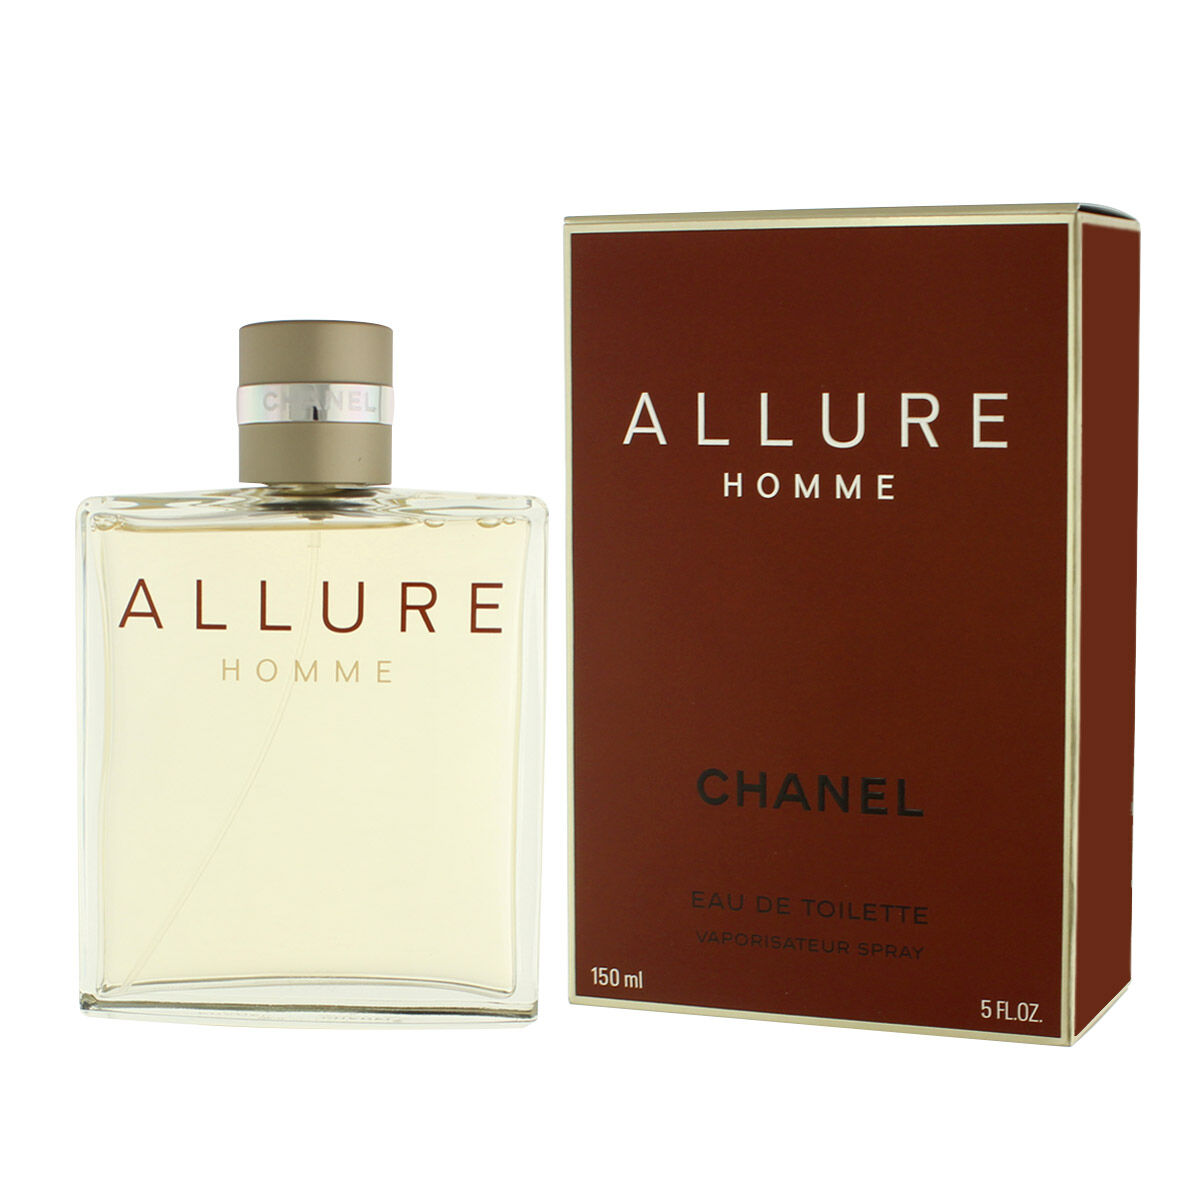 Men's perfume Chanel EDT Allure Homme 150 ml - buy, price, reviews in  Estonia